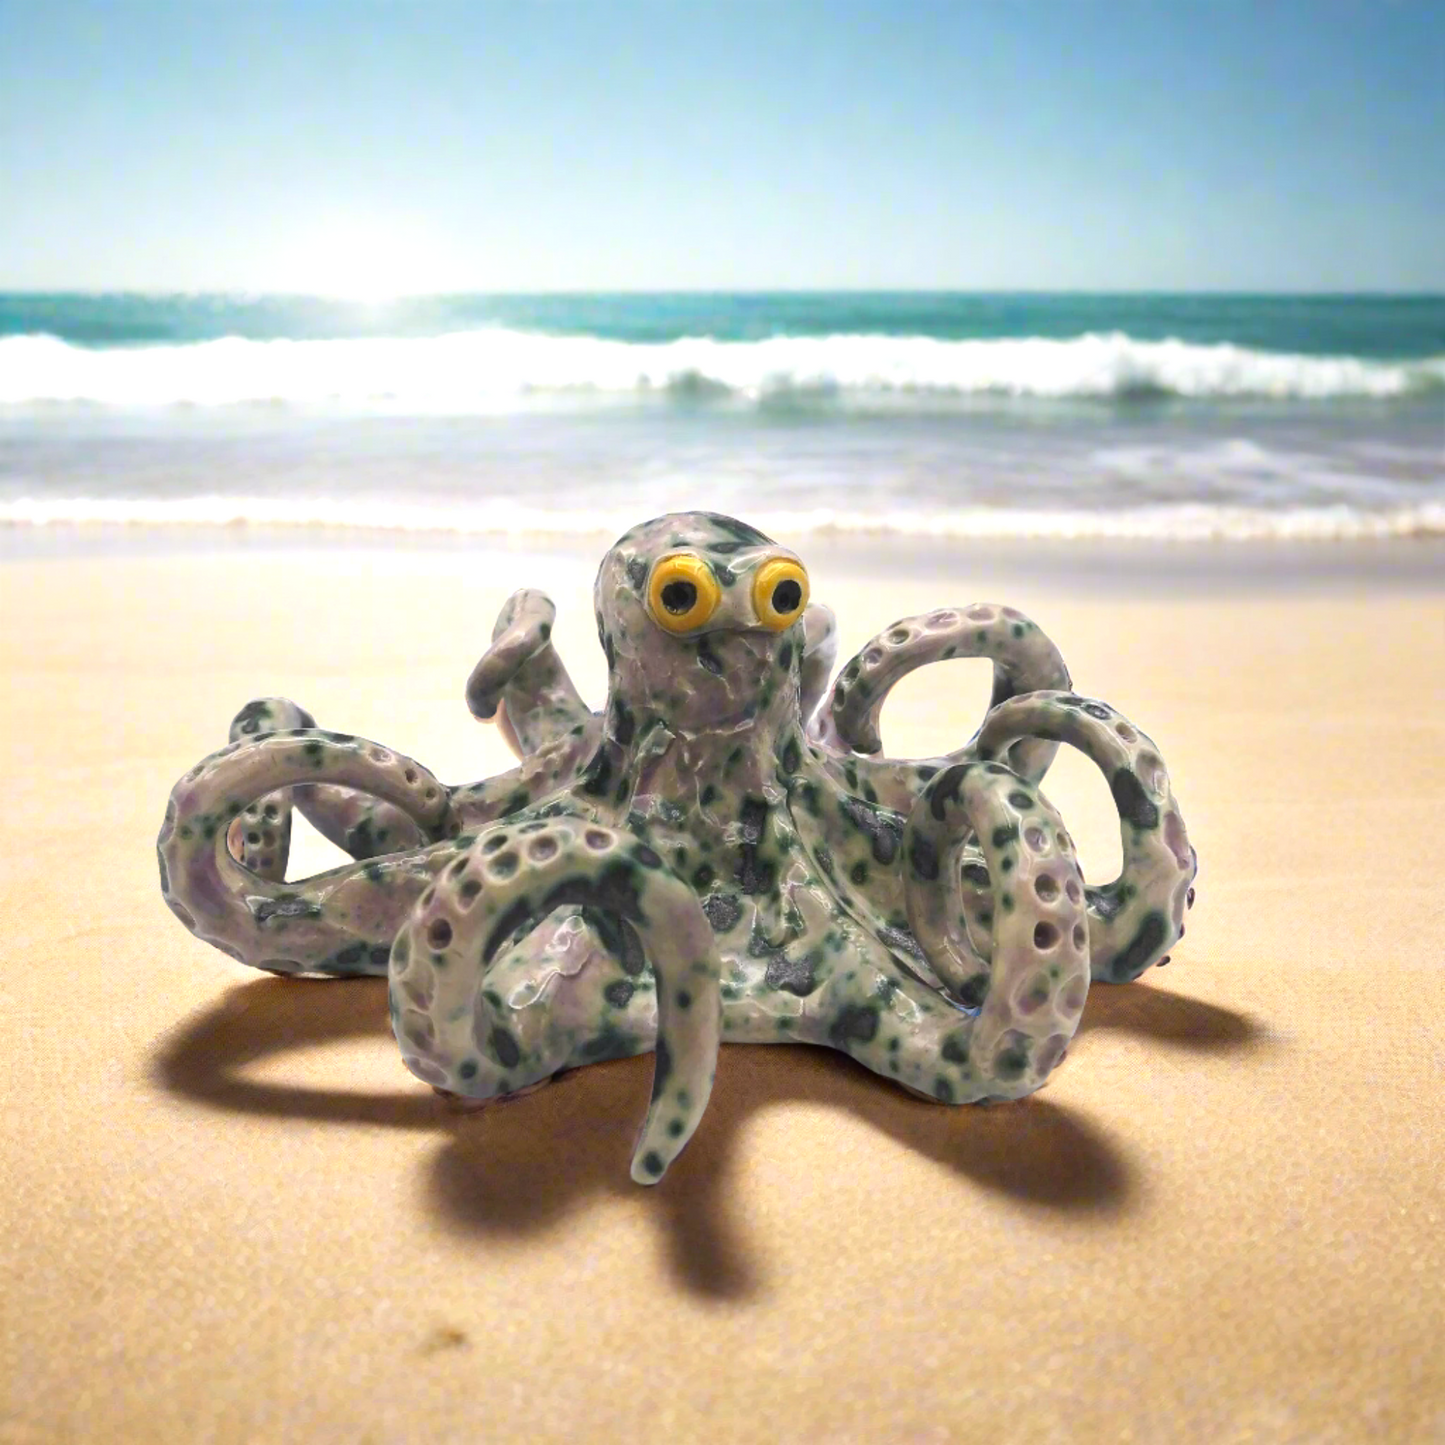 Modern Handmade Ceramic Octopus Sculpture, Pale Pink Octopus Coastal Art, Contemporary Wedding Gift For Couple, Decorative Table Sculpture